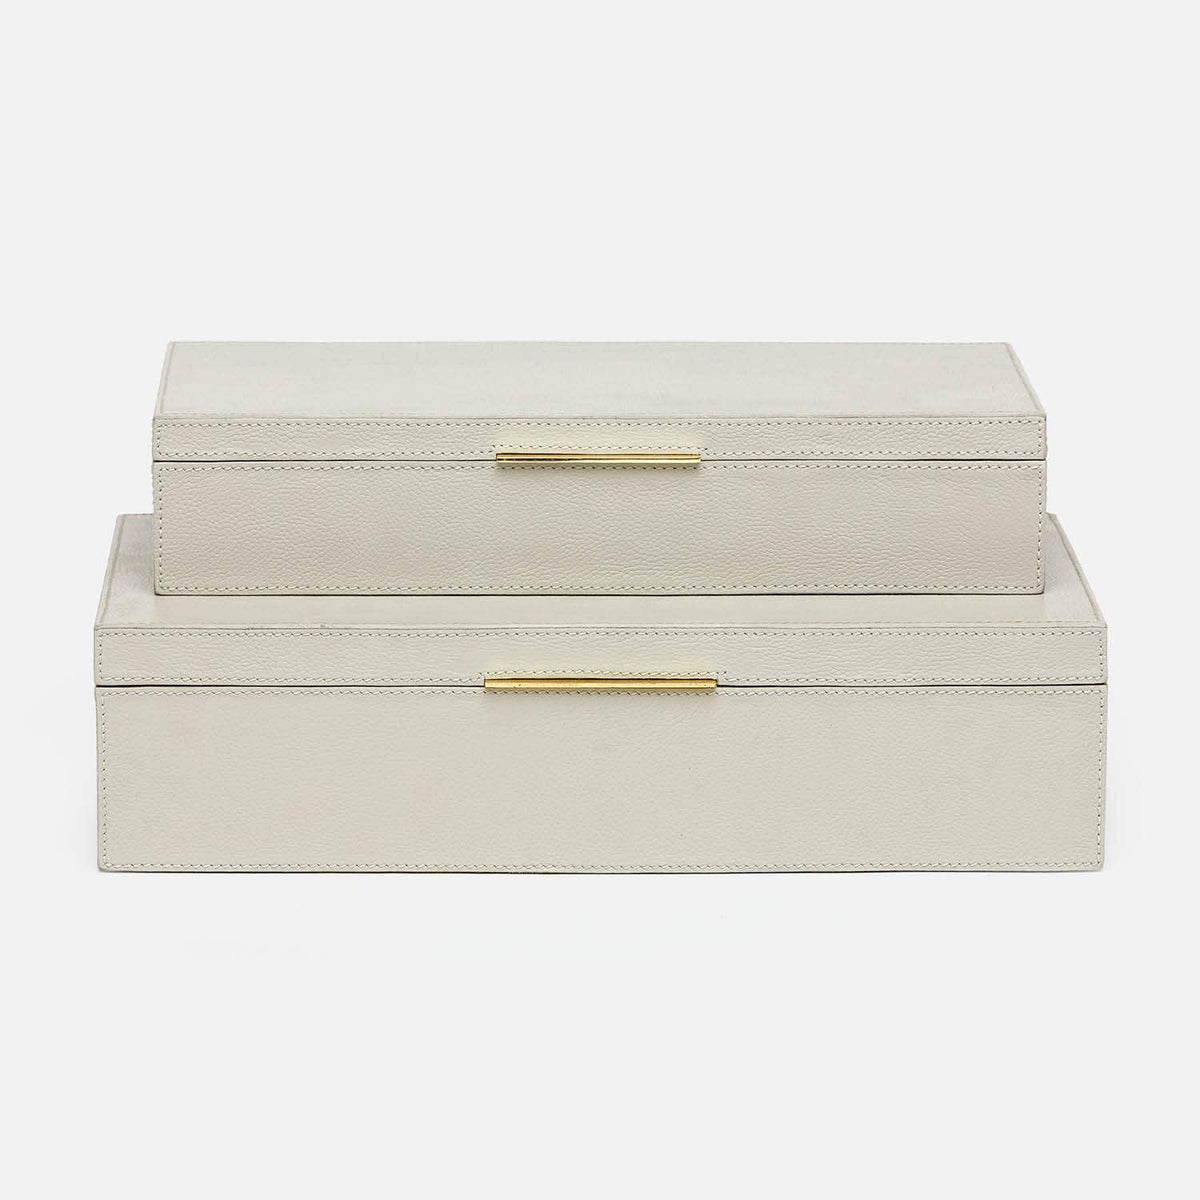 Ralston Decorative Boxes - Set of 2 Light Gray Full Grain Leather